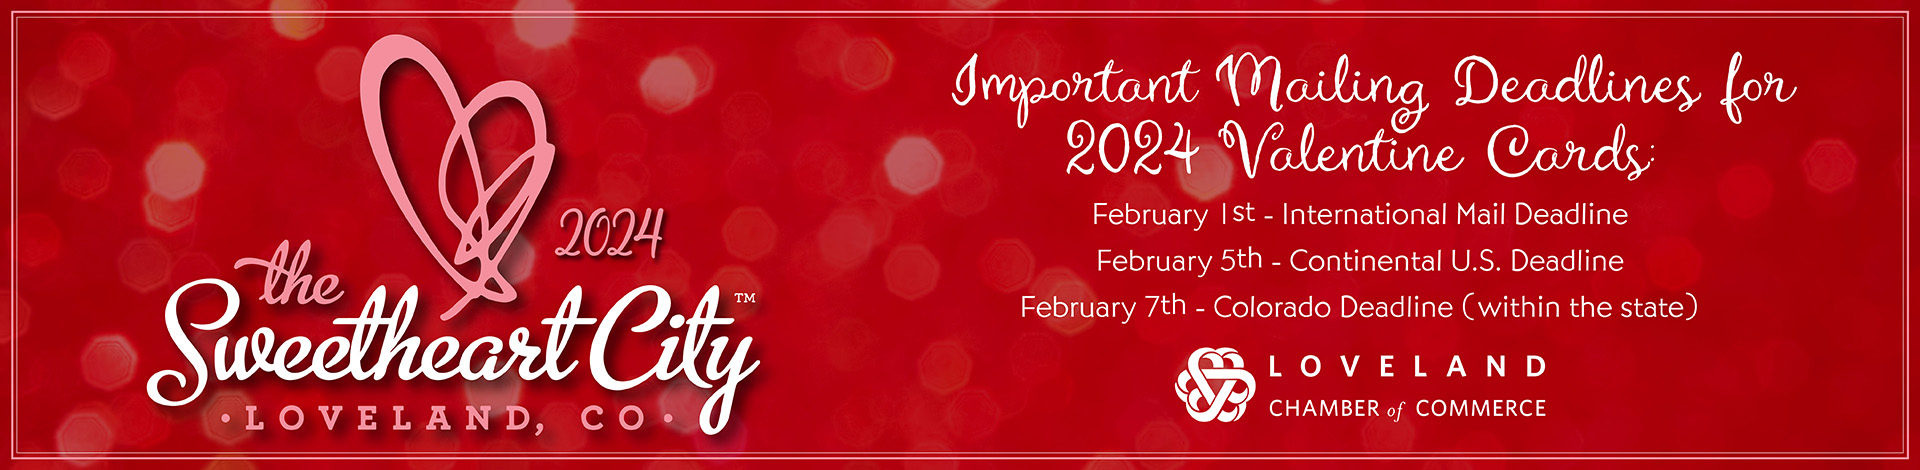 Valentine Card Making Workshop Tickets, Sat, Feb 3, 2024 at 3:00 PM